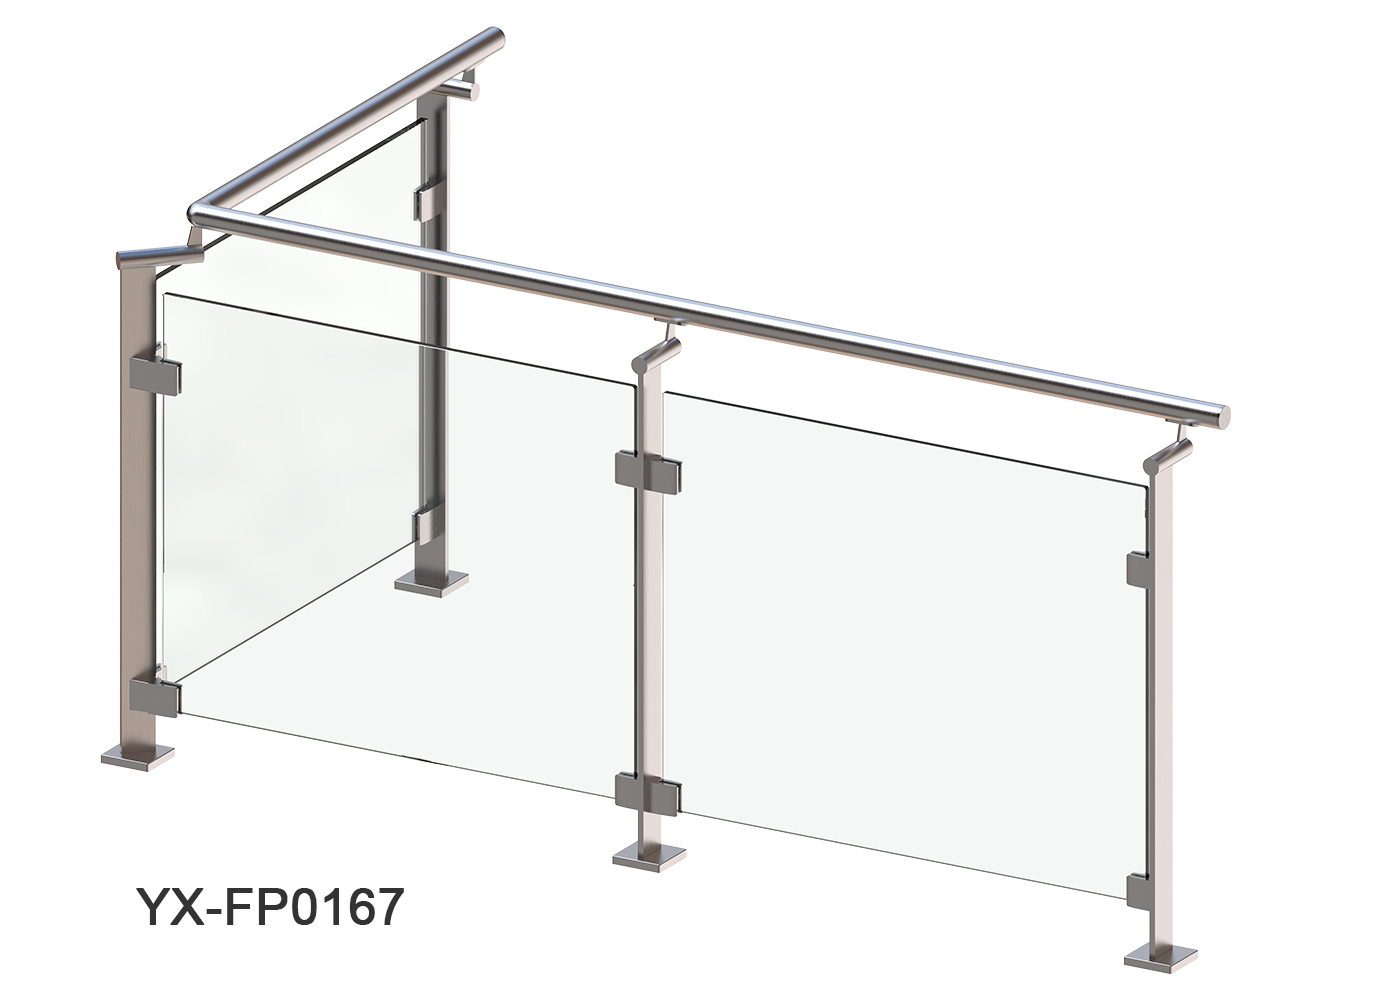 FLAT BAR BALUSTRADE FP0167 GLASS SYSTEM